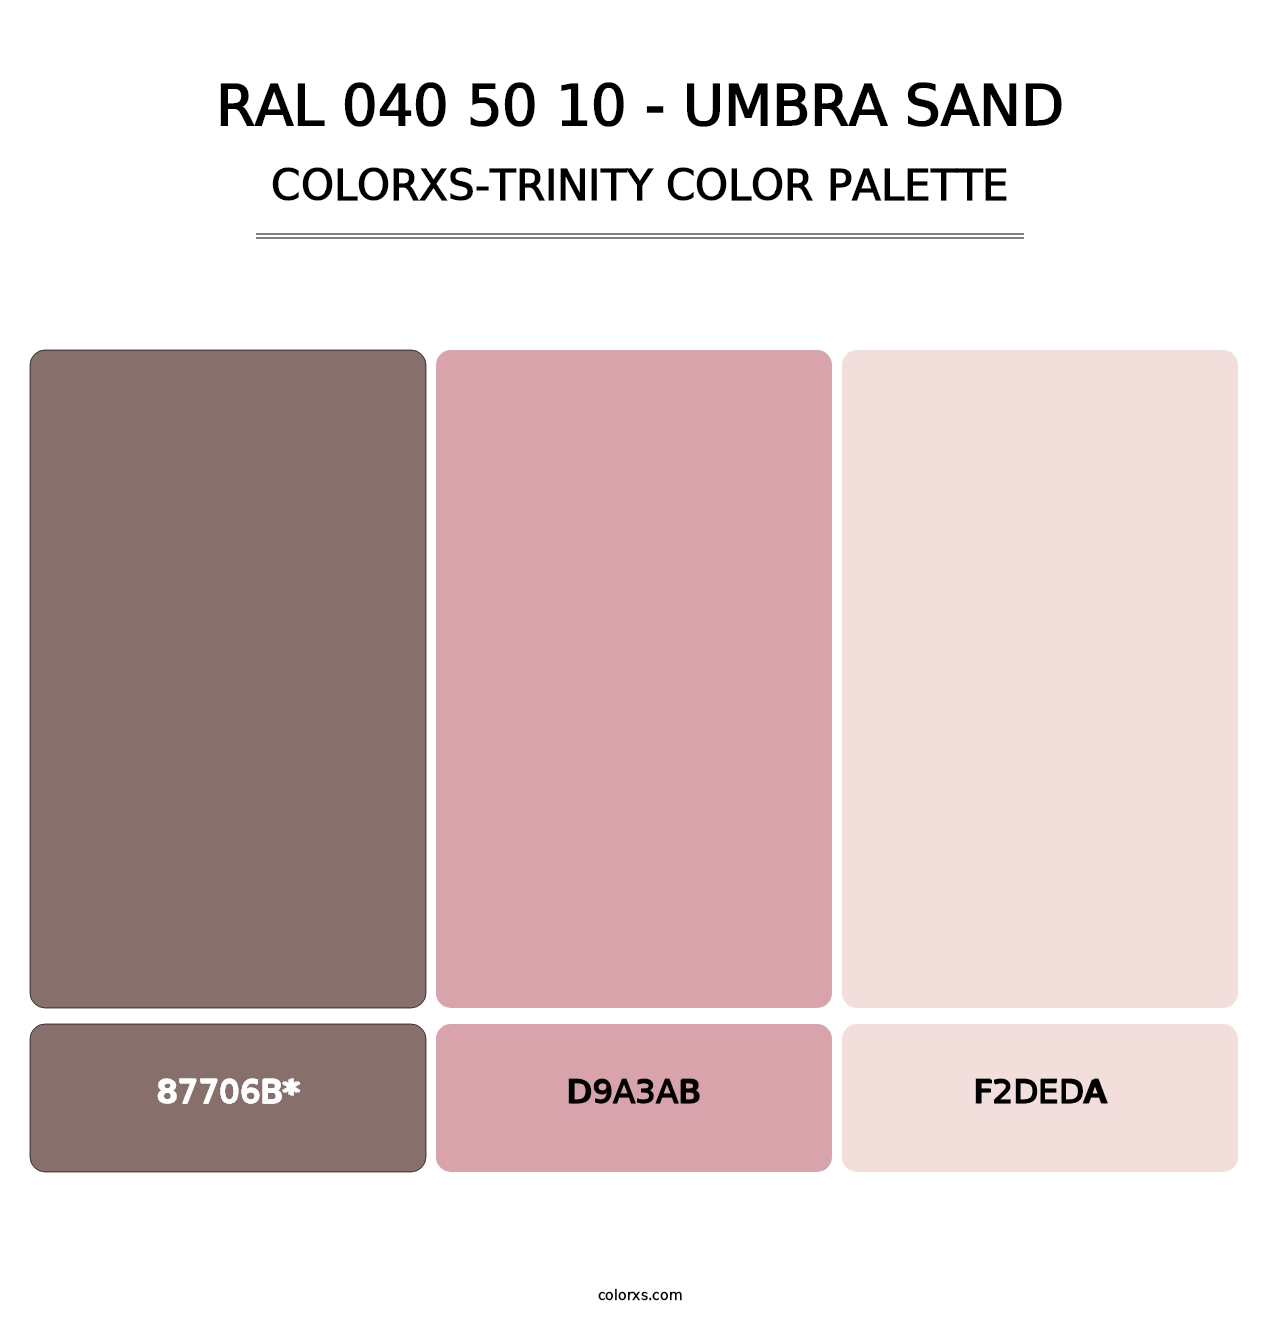 RAL 040 50 10 - Umbra Sand - Colorxs Trinity Palette